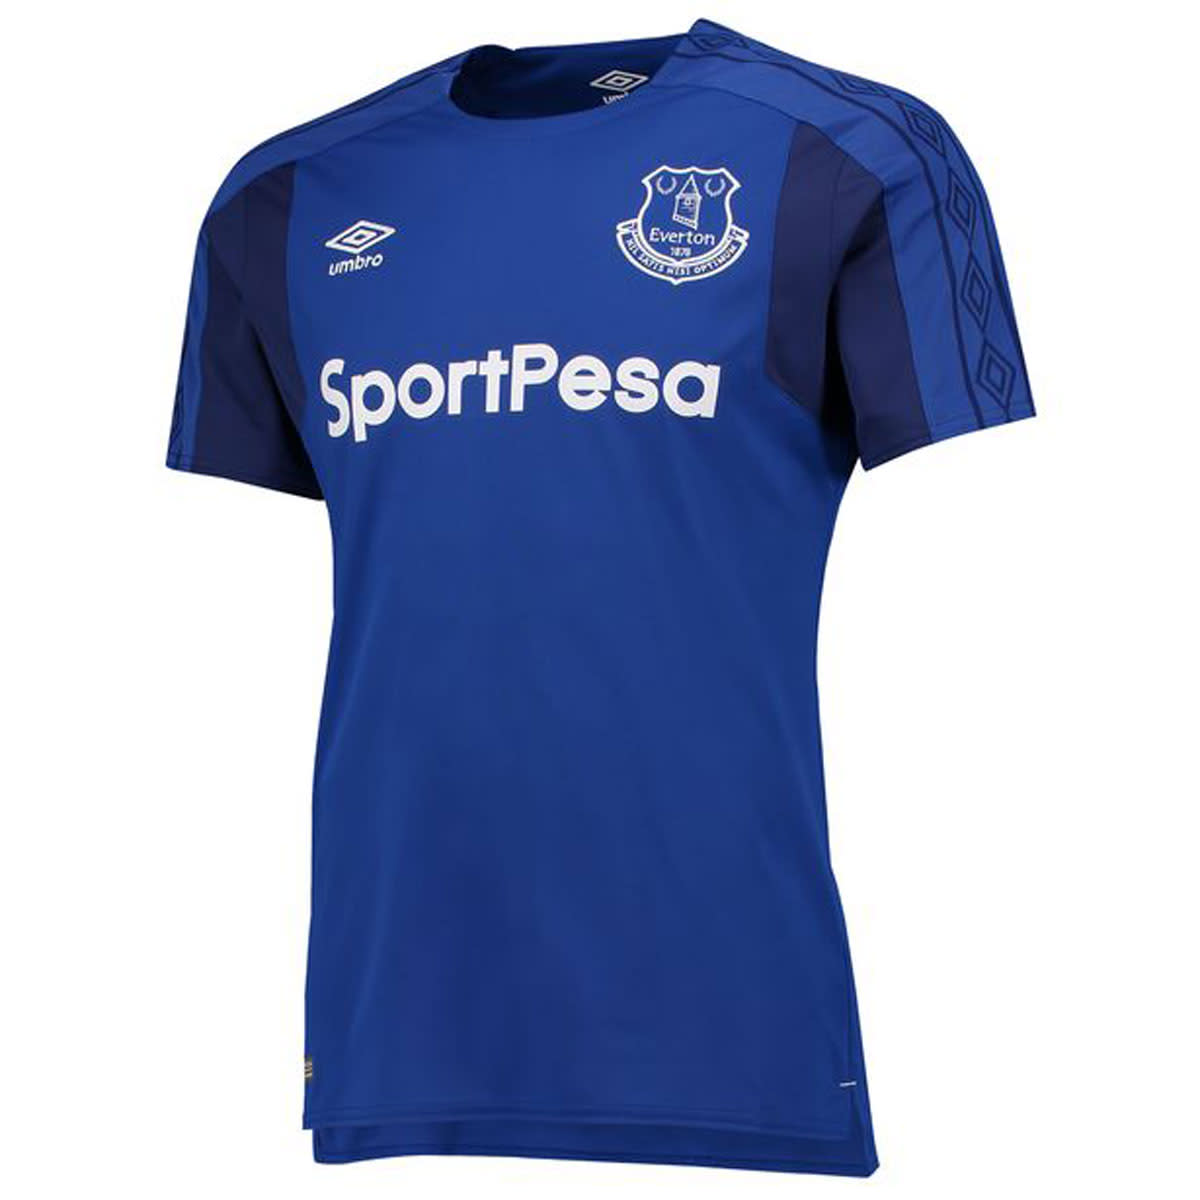 Everton-Kit.jpg